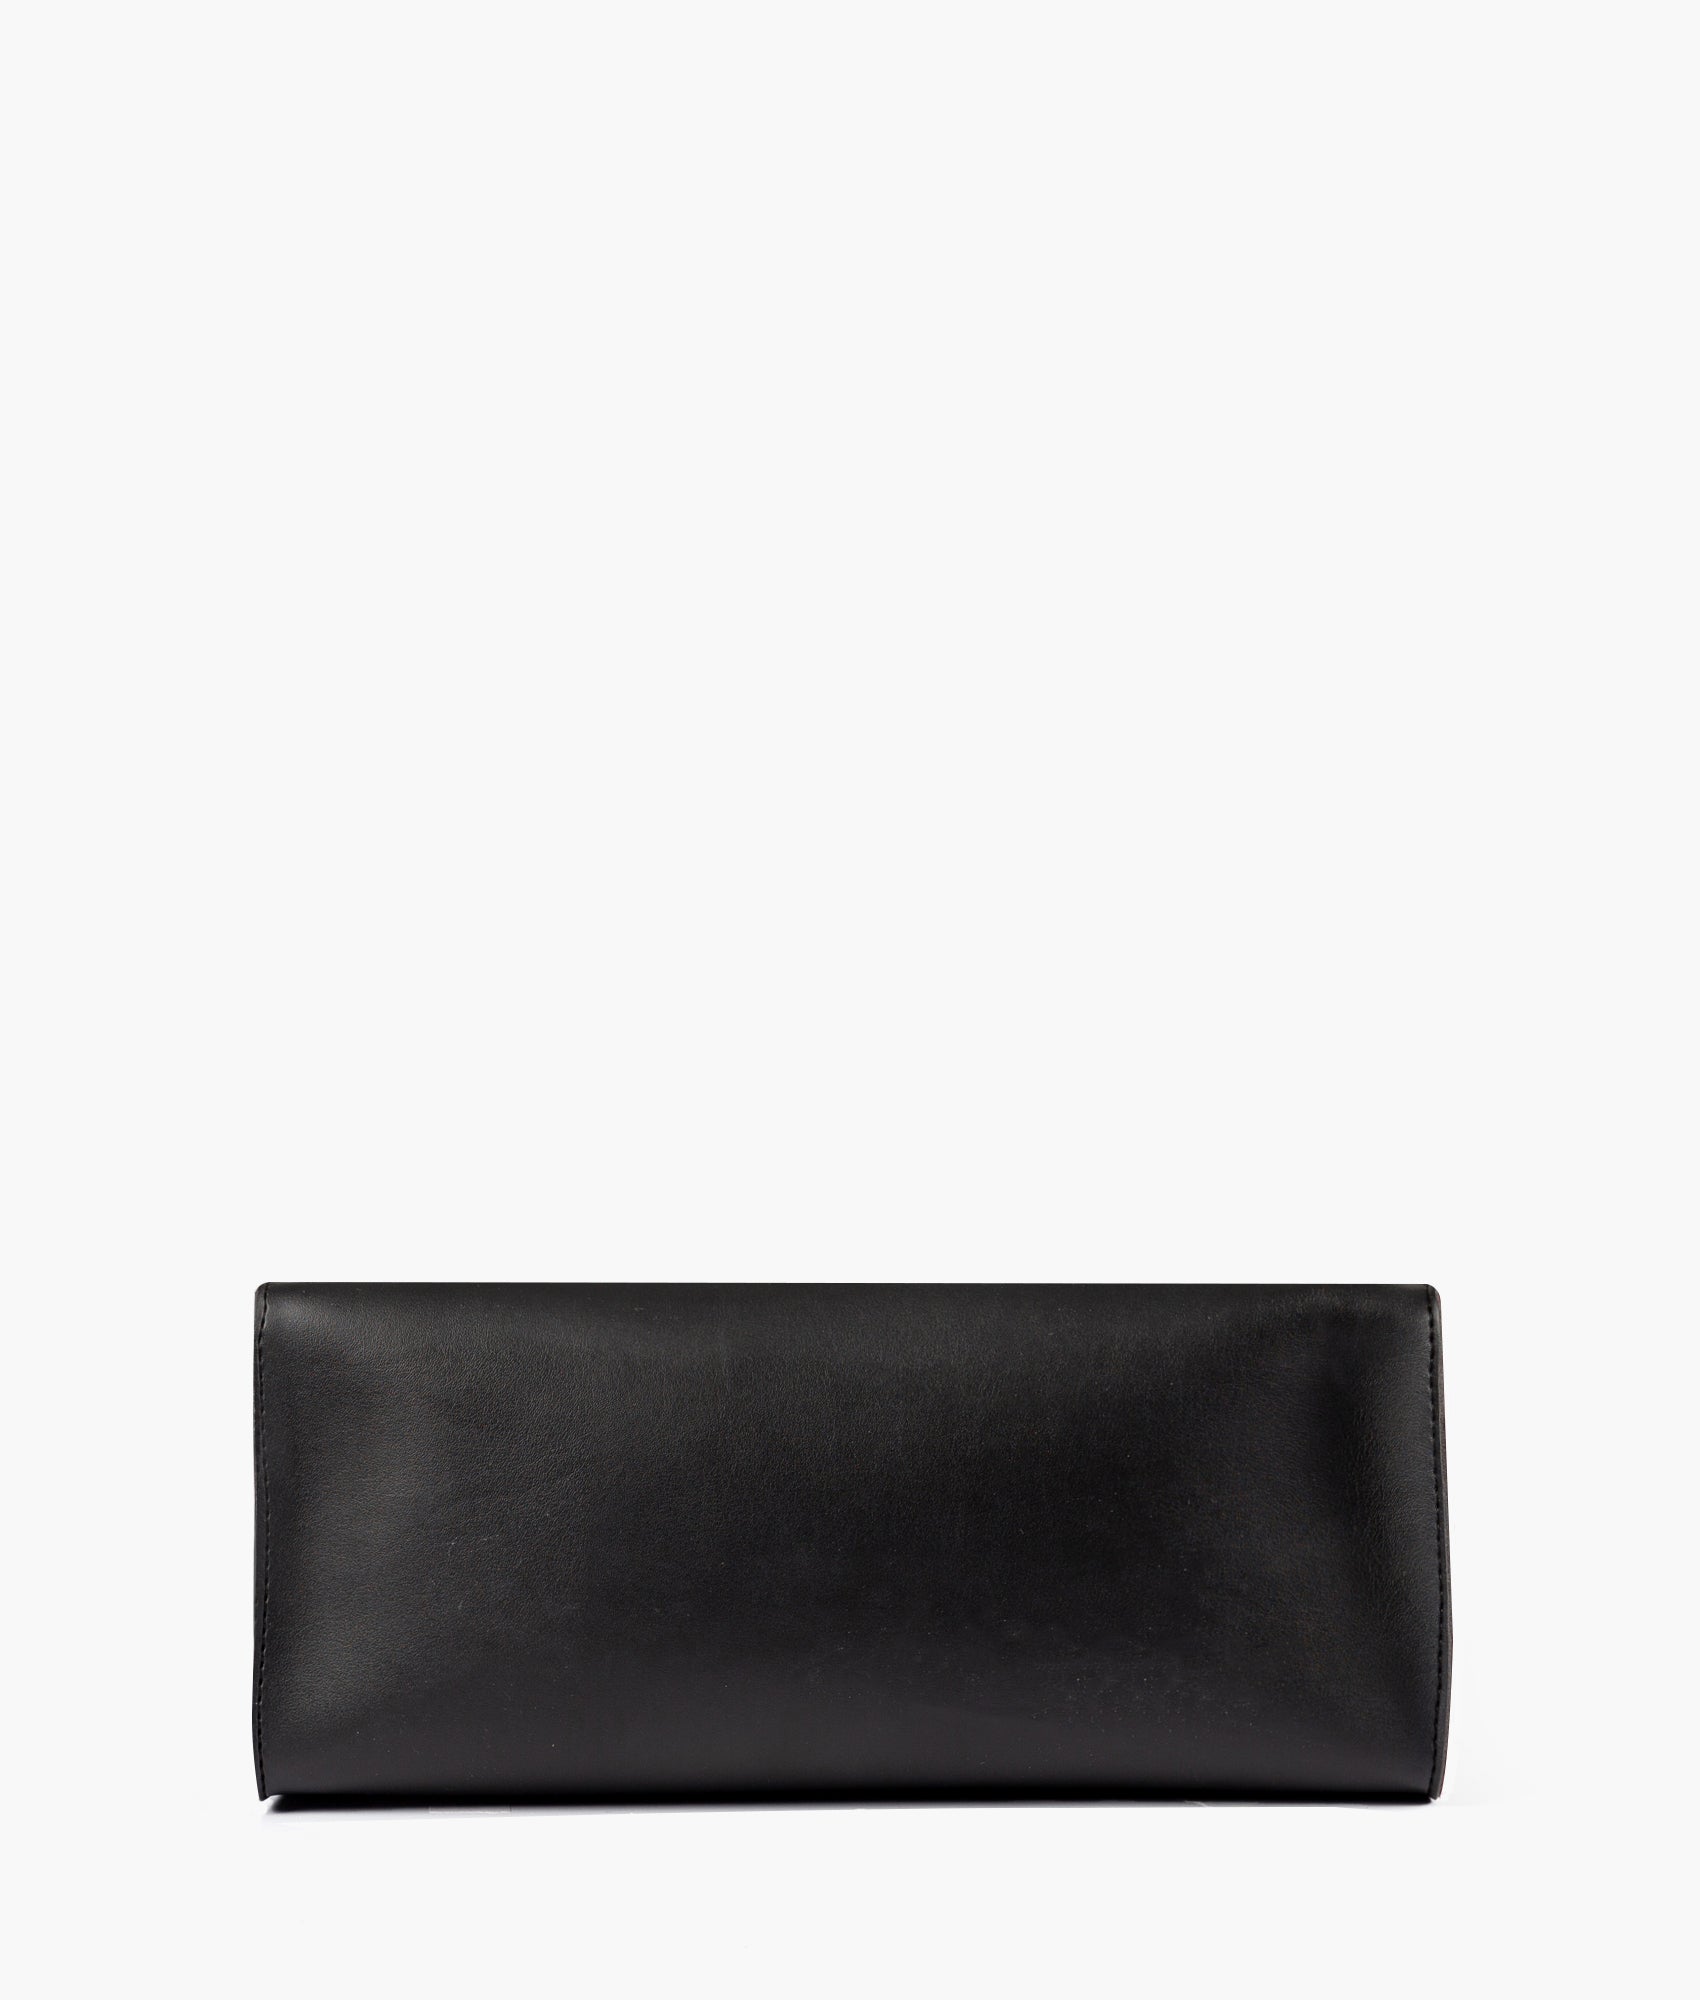 Black multi compartment satchel bag